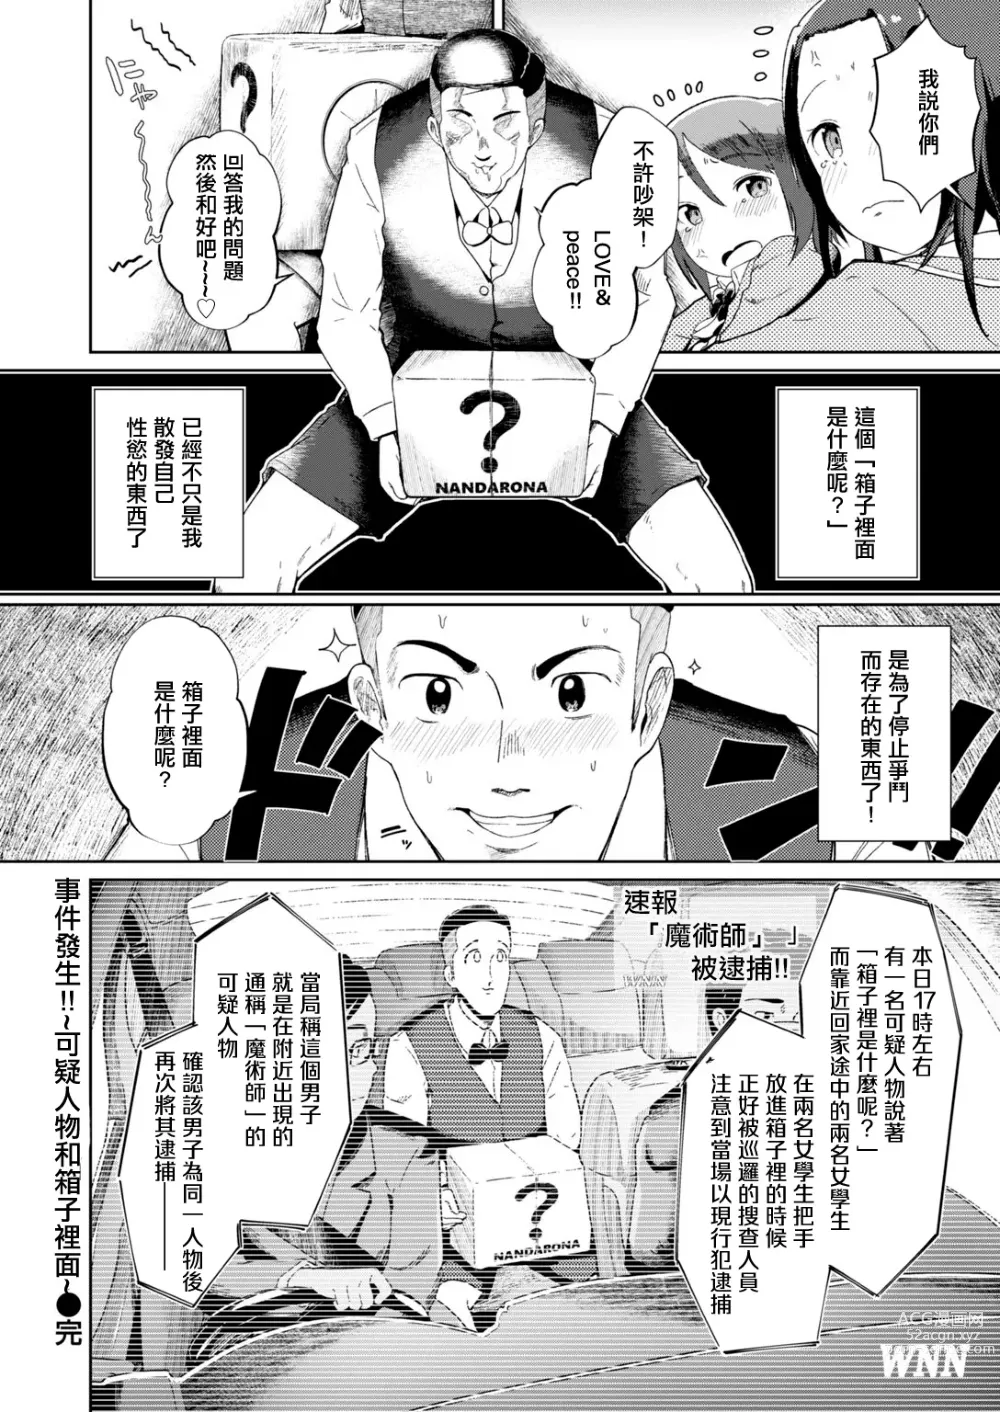 Page 20 of manga  事件發生!! ~可疑人物和箱子裡面~